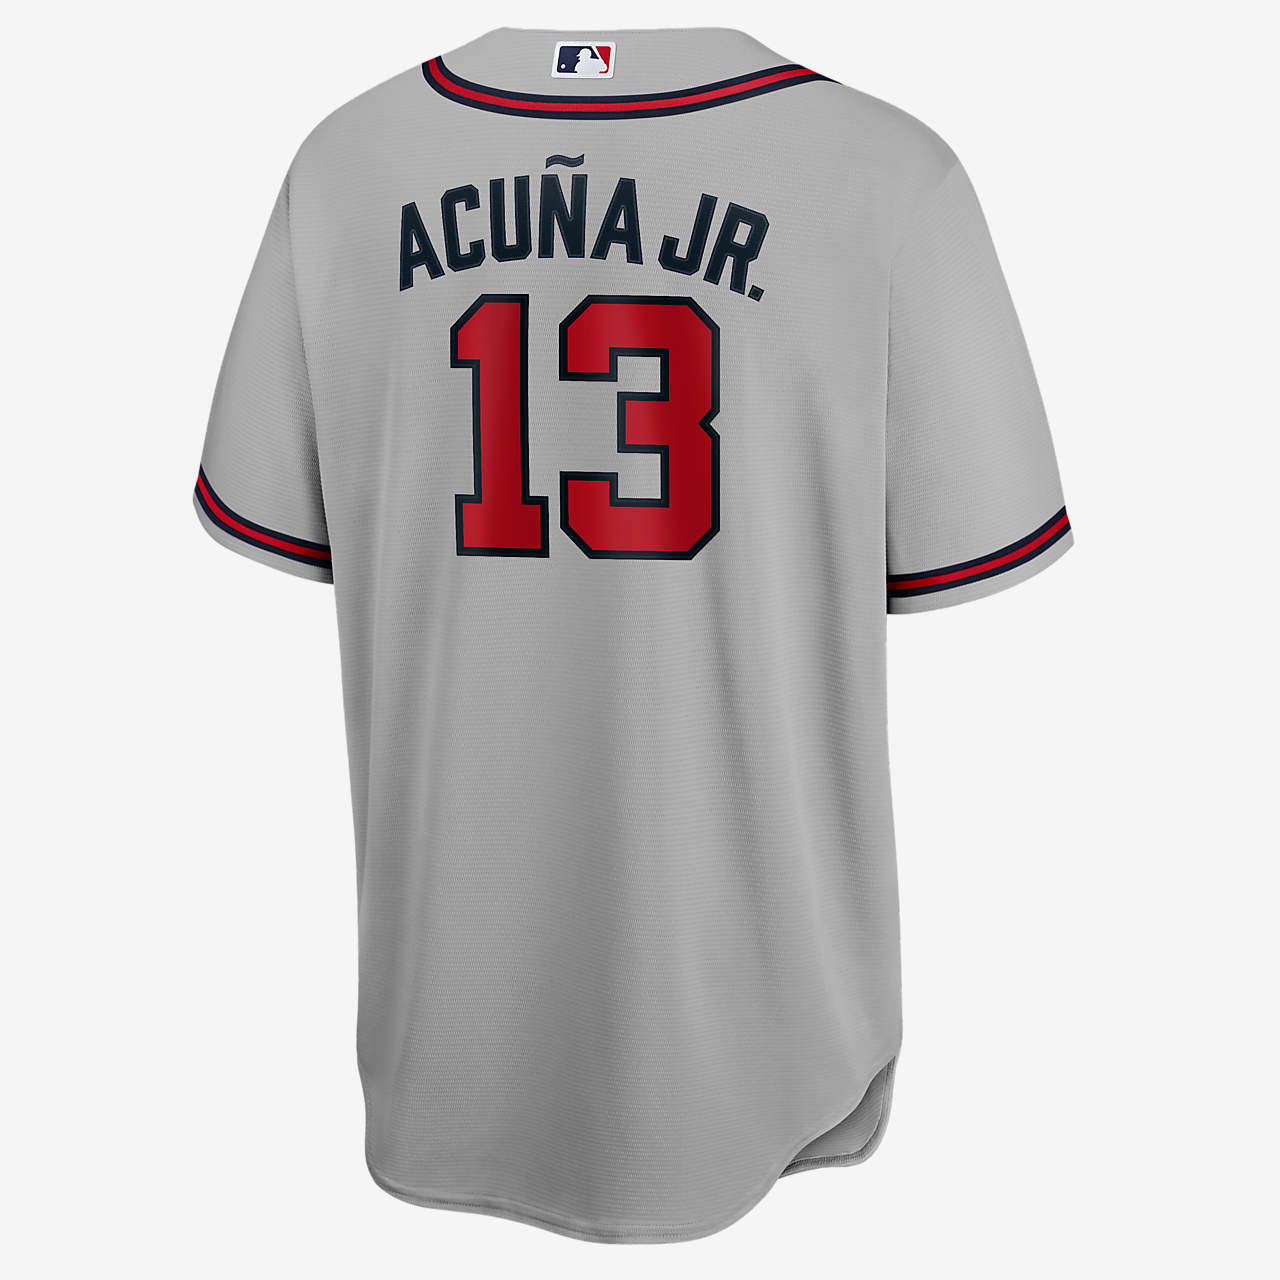 Ronald Acuna Jr Jersey - Ronald Acuna Jr Autographed Atlanta Braves ...